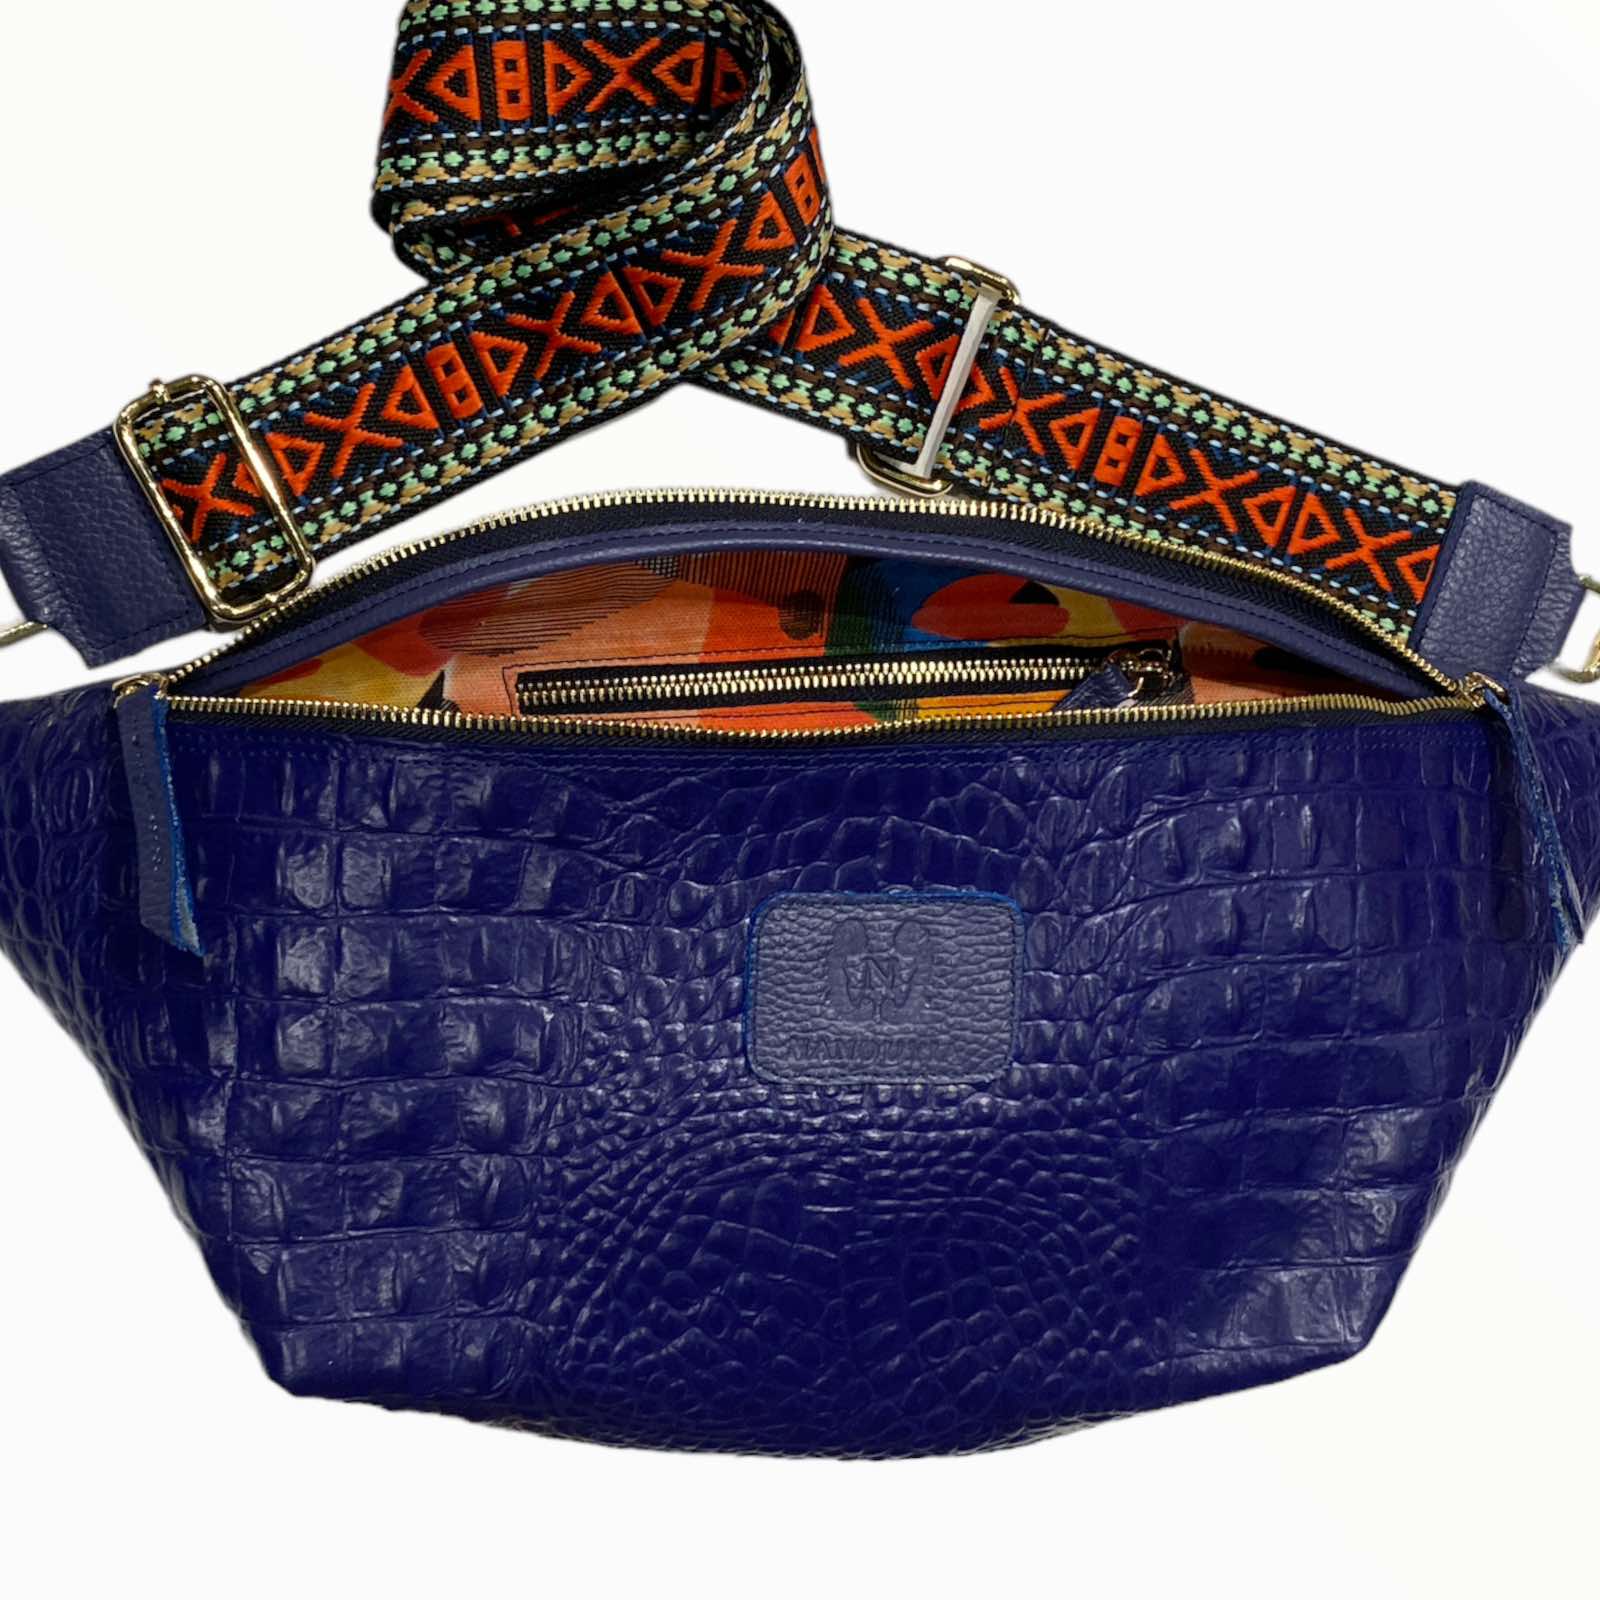 XXL royal blue alligator-print leather belt bag